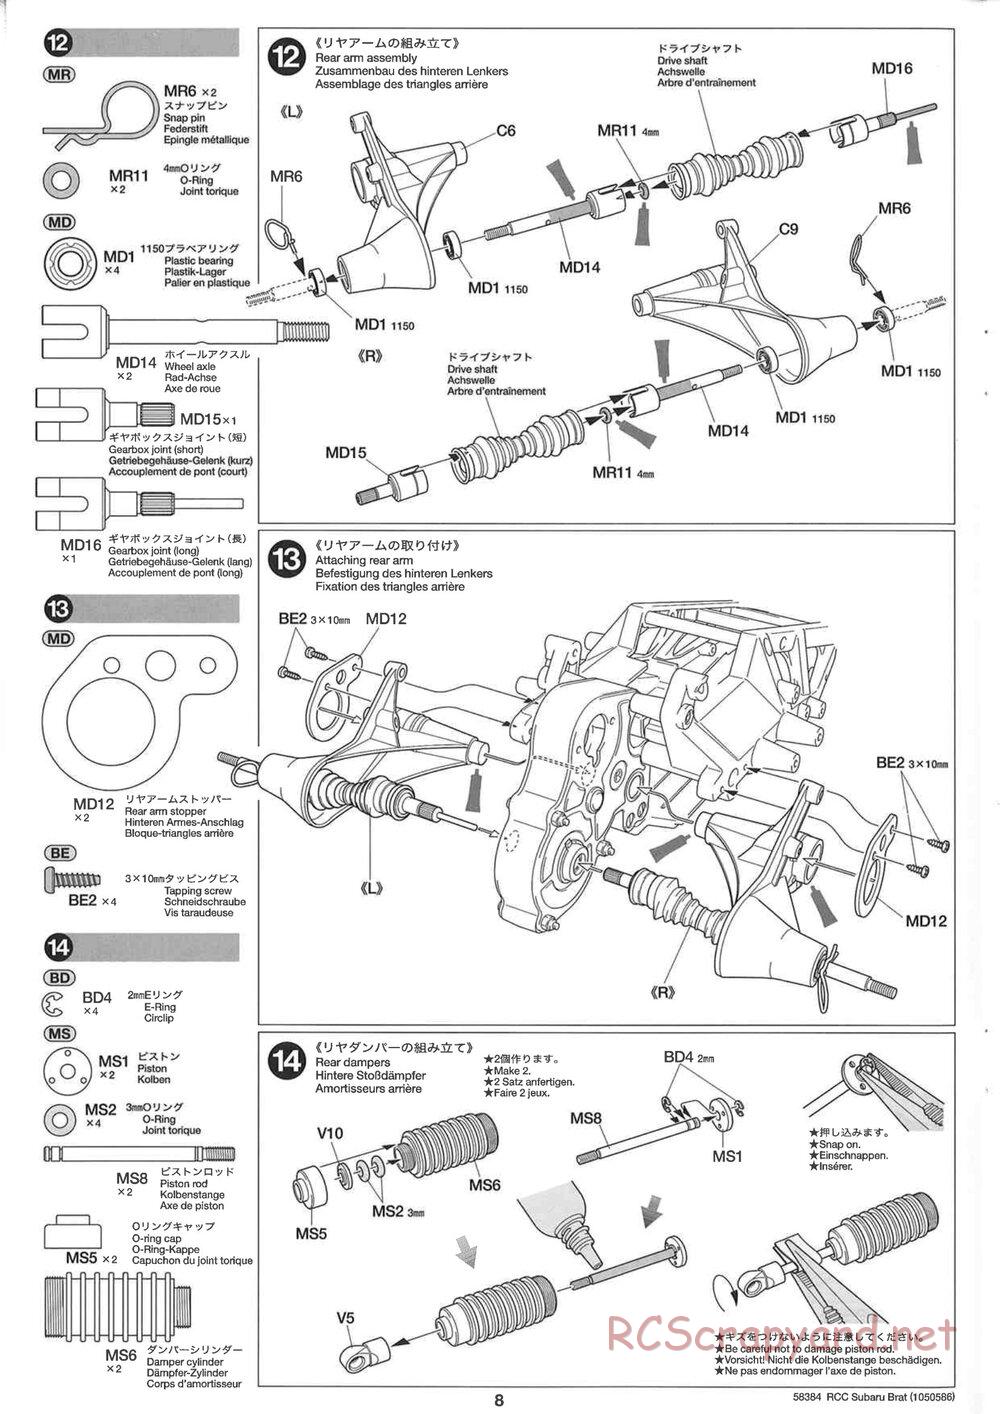 Tamiya - Subaru Brat 2007 - ORV Chassis - Manual - Page 8